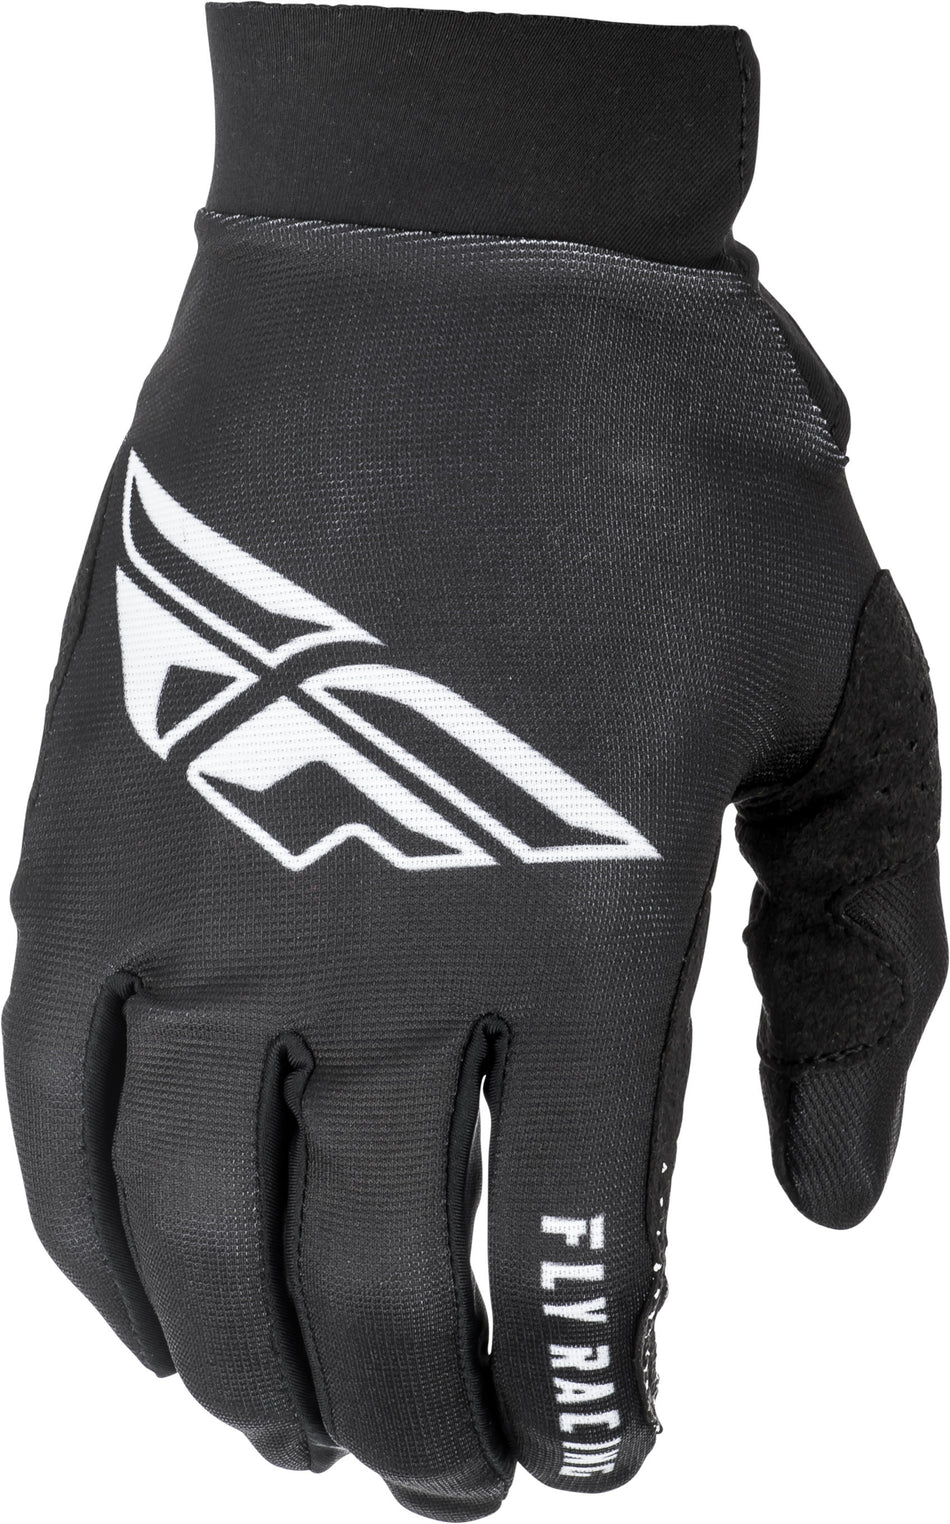 FLY RACING Pro Lite Gloves Black/White Sz 07 372-81007